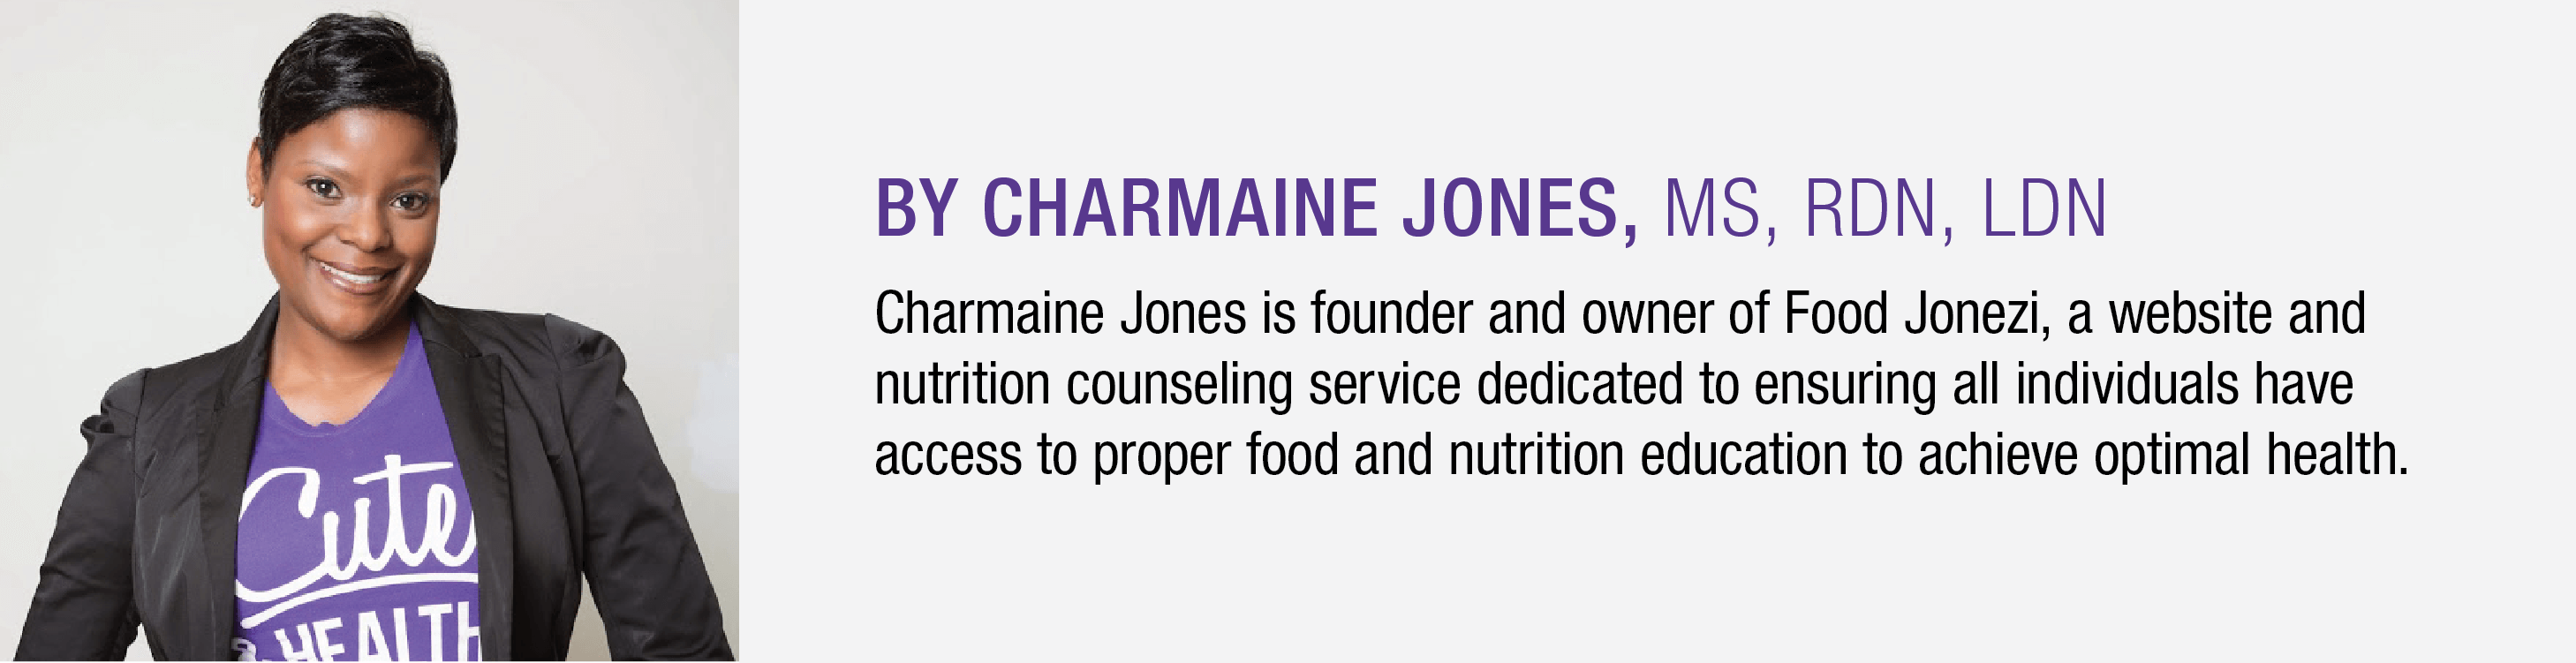 Charmaine Jones bio